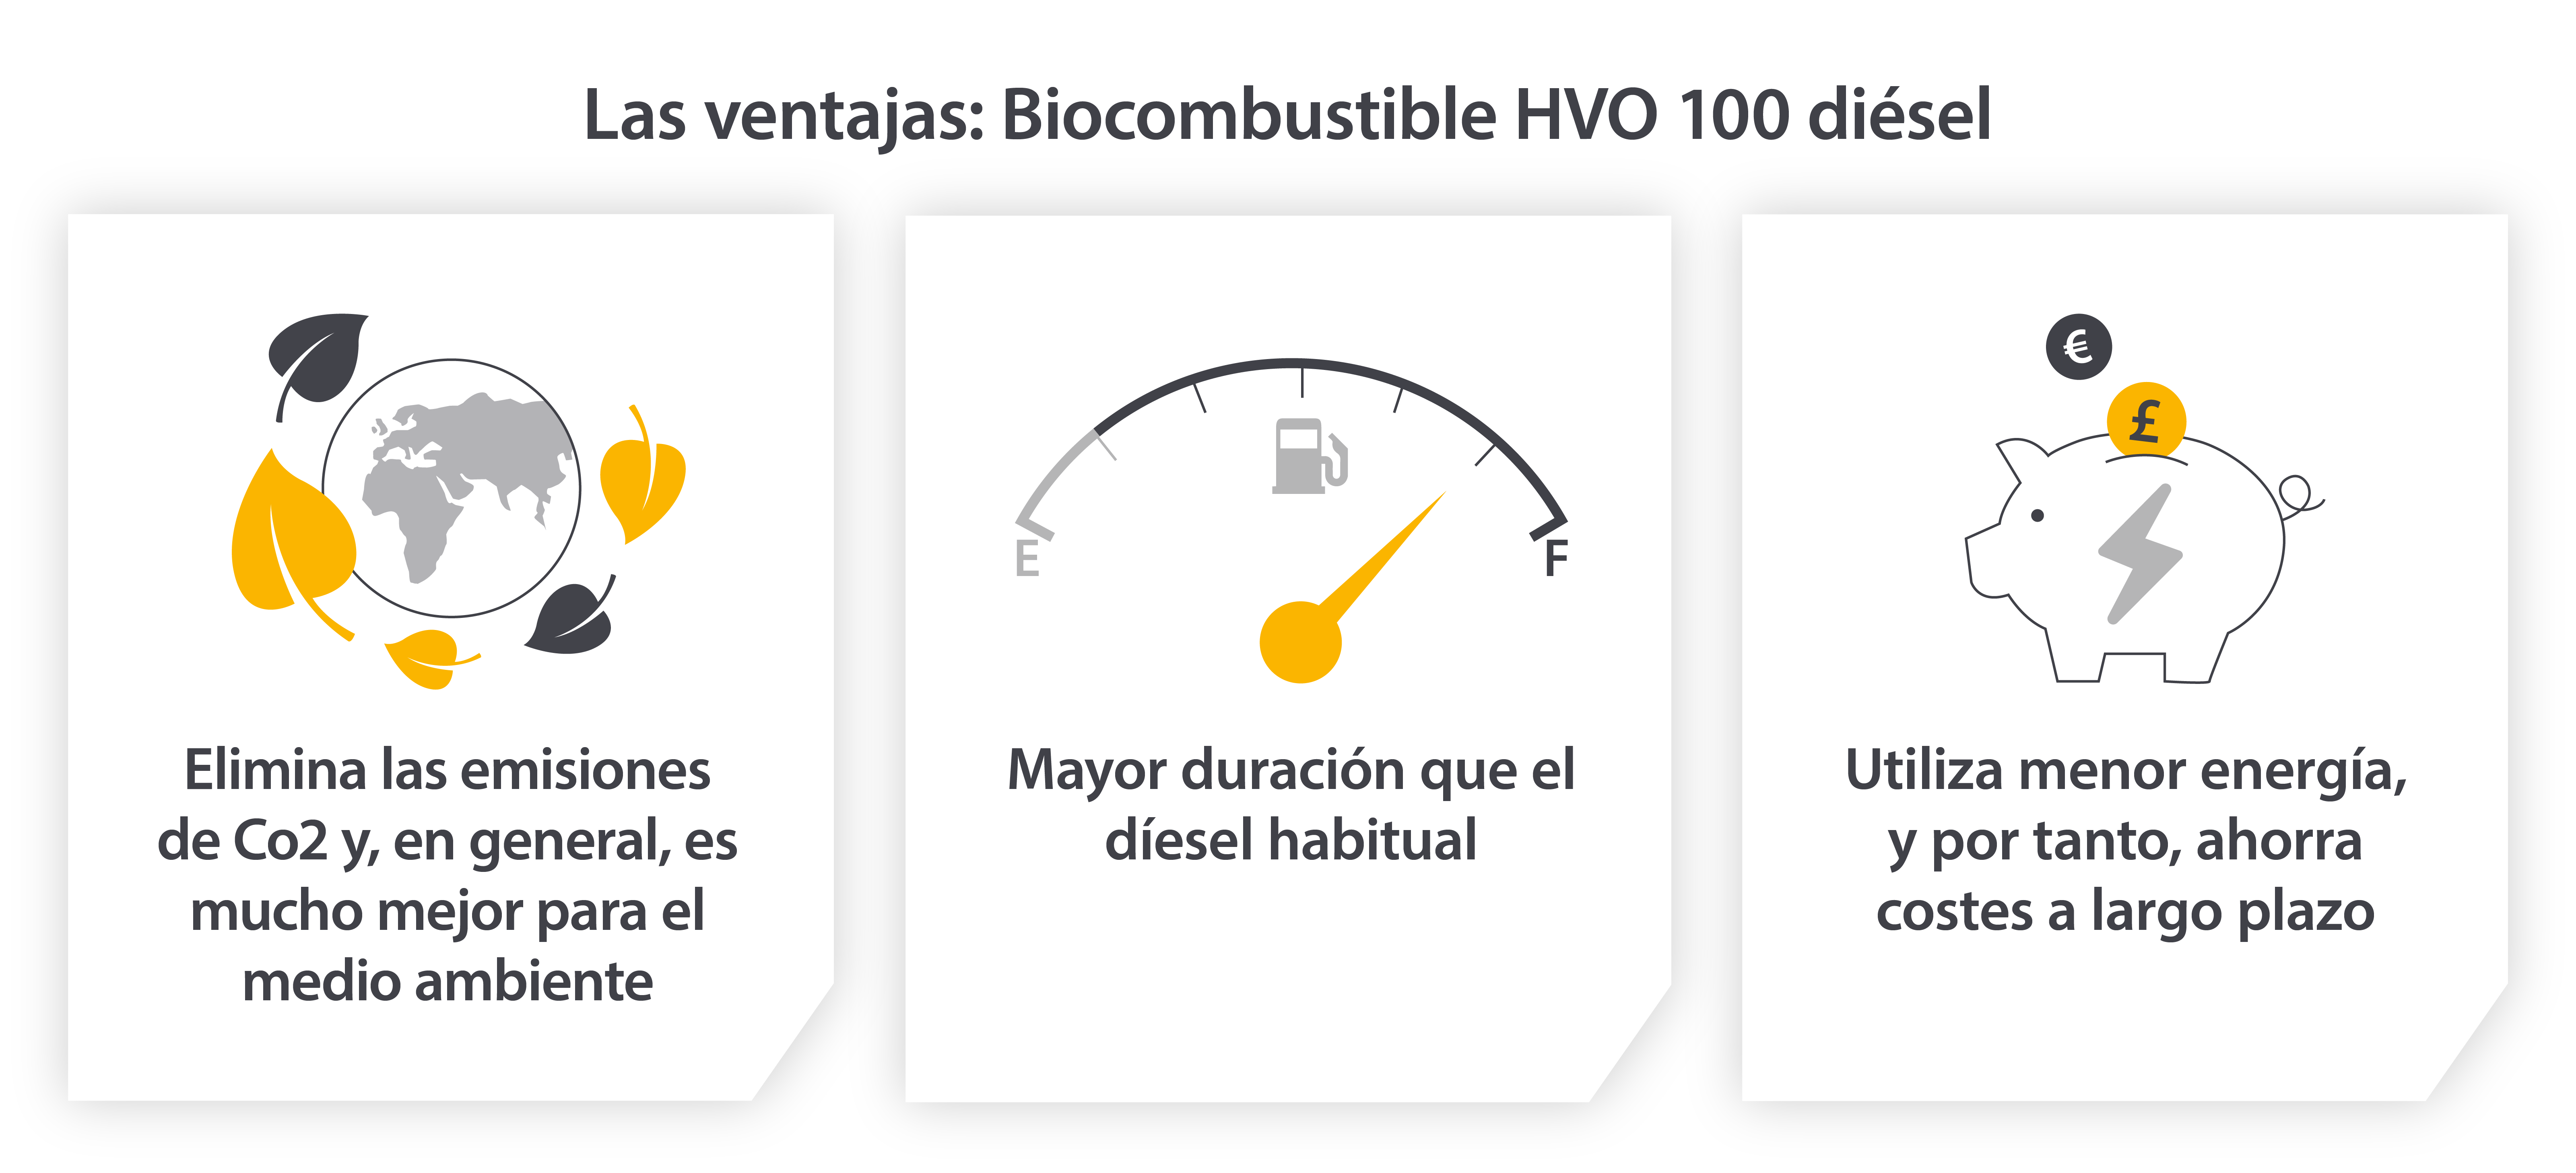 Las ventajas del diésel biocombustible HVO 100